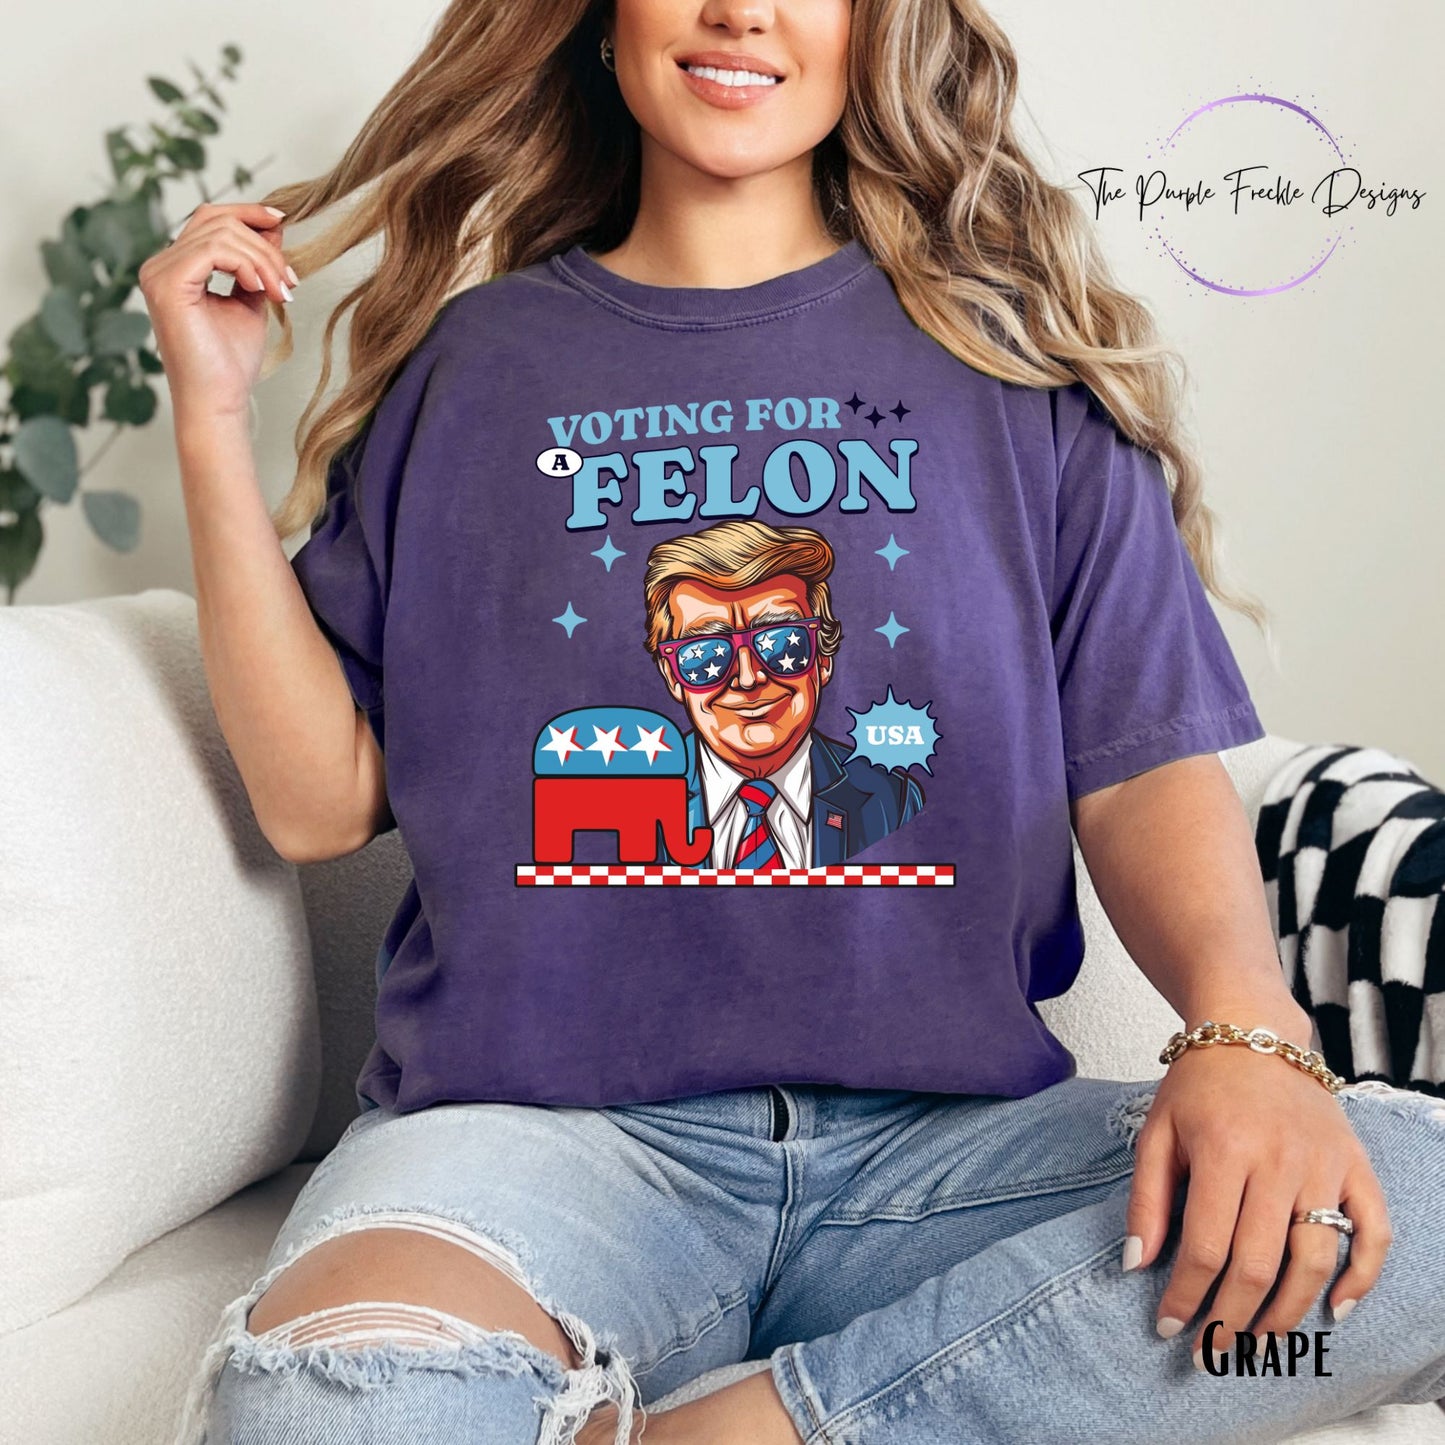 Voting For a Felon